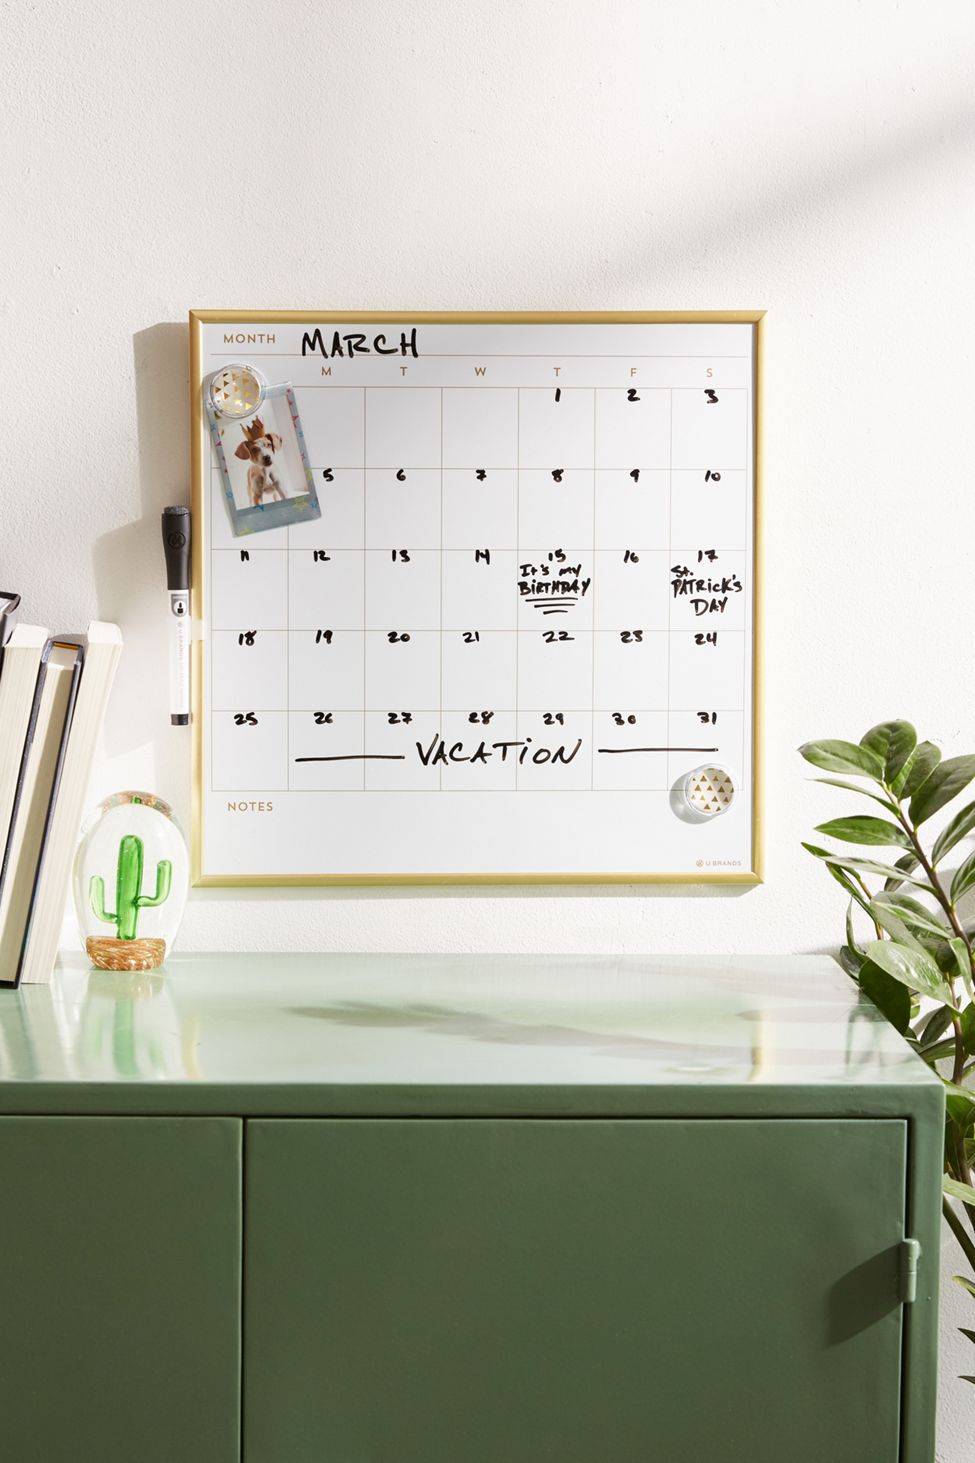 2020 Calendar Year Monthly Calendar Zoe Deco 15x12 Inch Horizontal Hanging Wall Calendar Stickers Impressionist Art Design 